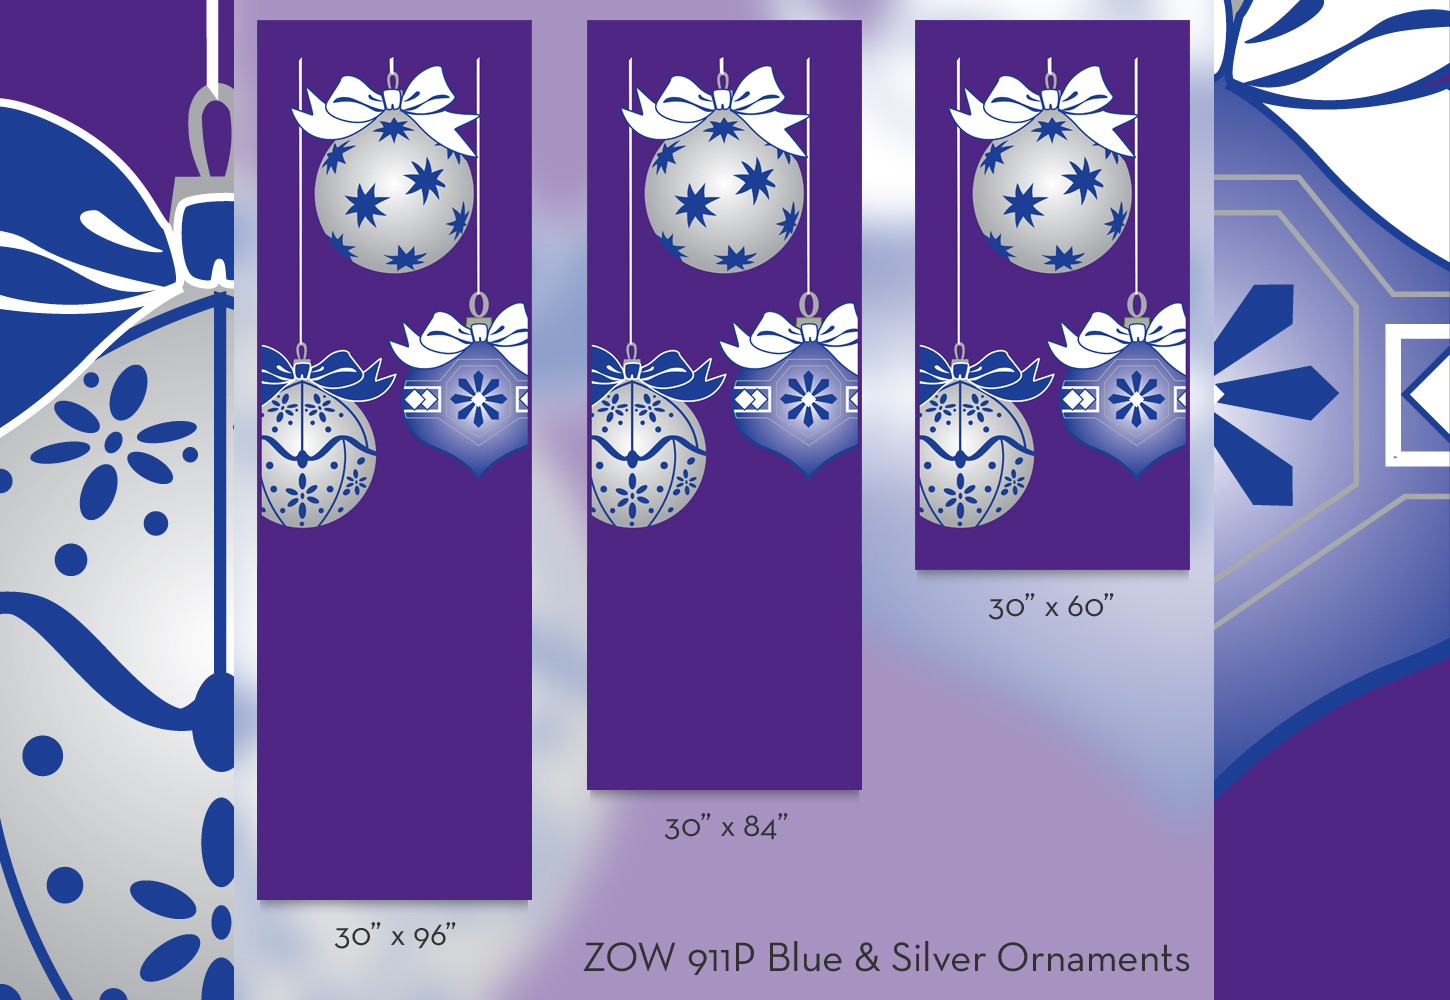 ZOW 911P Blue & Silver Ornaments